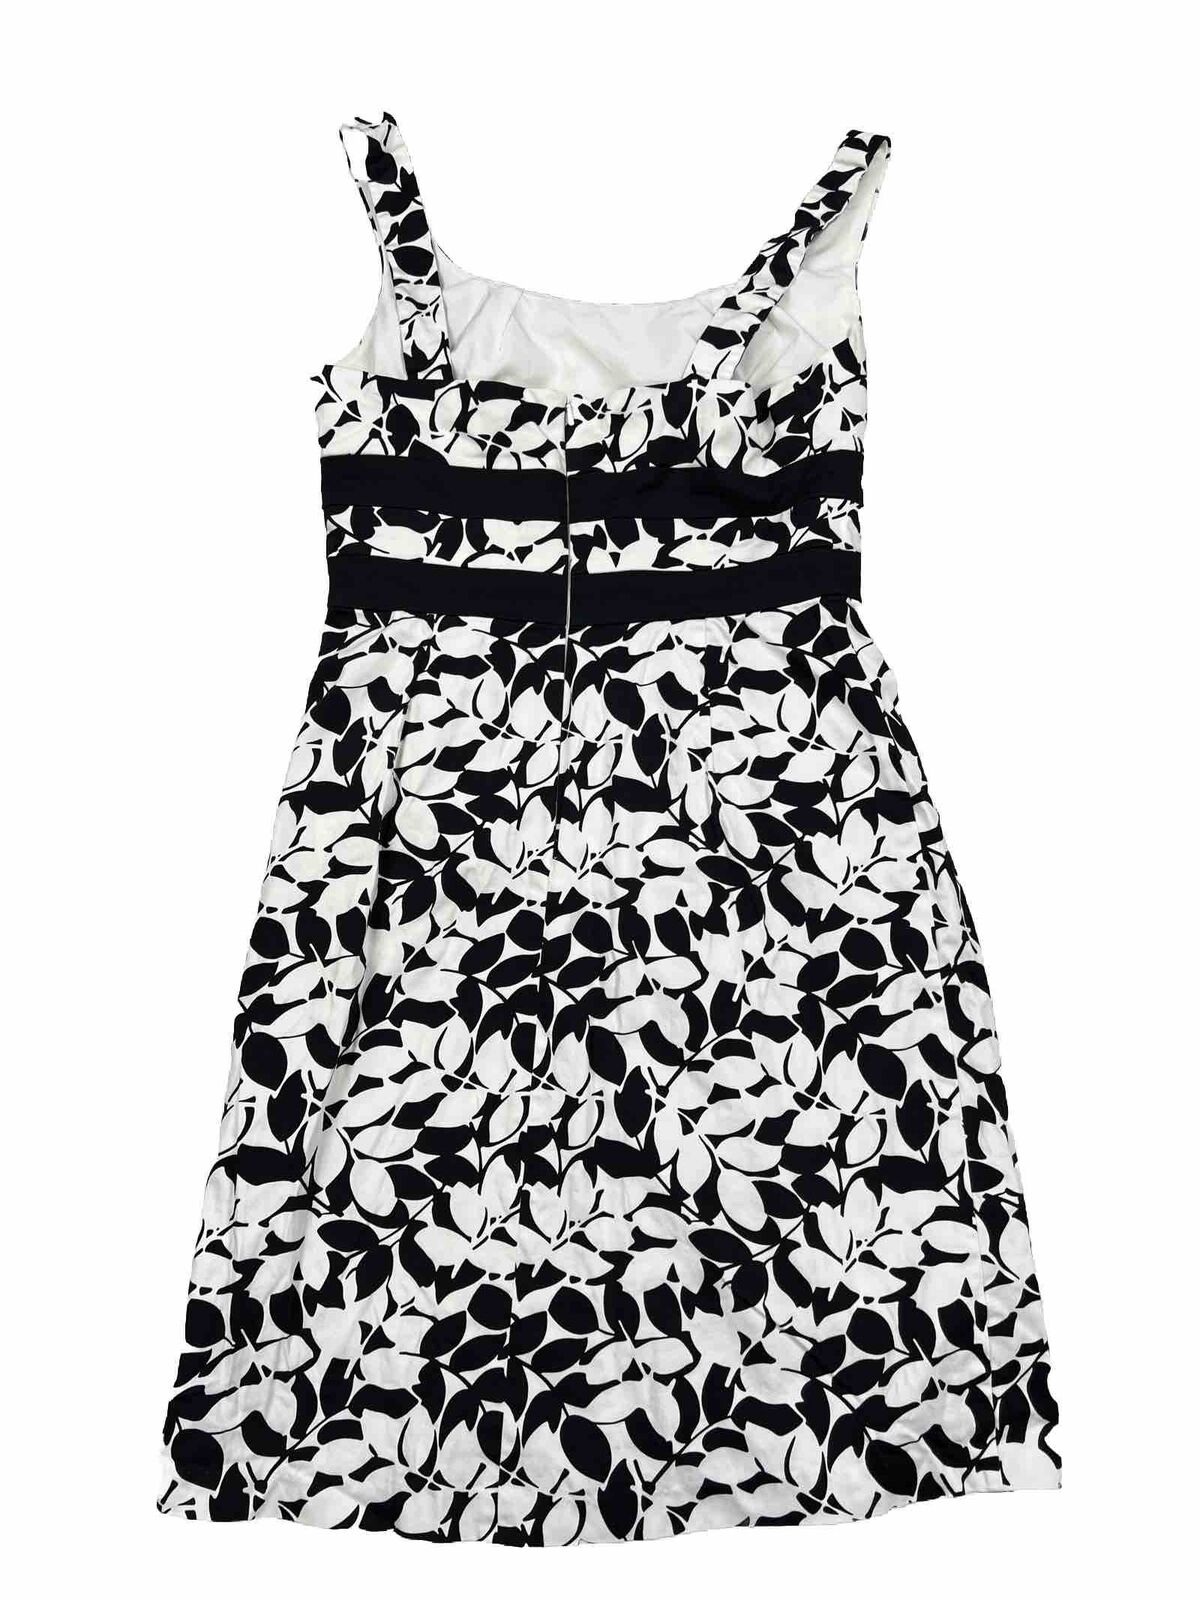 White House Black Market Women's White/Black Sleeveless A-Line Dress - 8